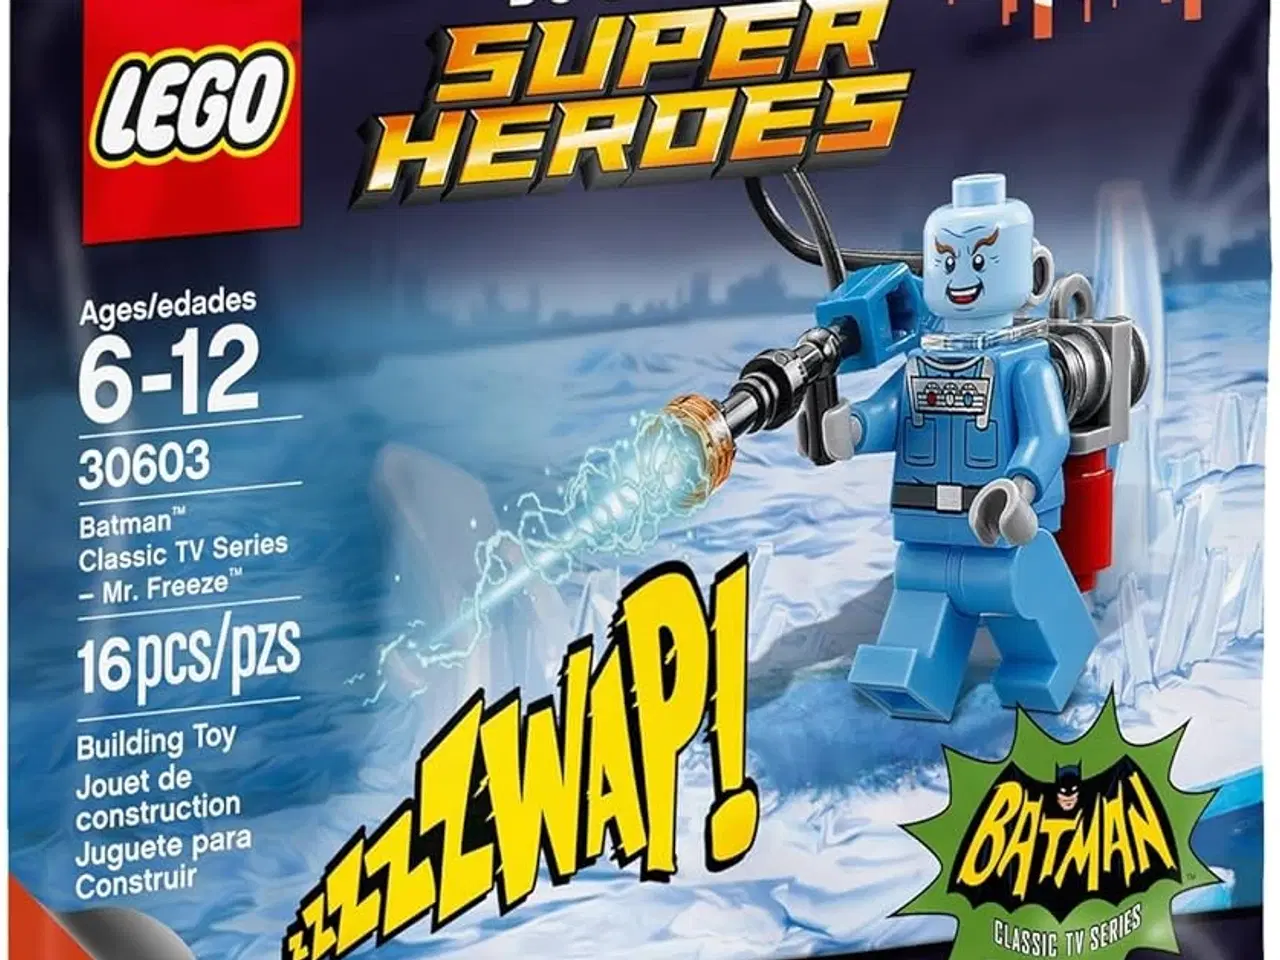 Billede 2 - Mr. Freeze - Lego super heroes - minifigur 